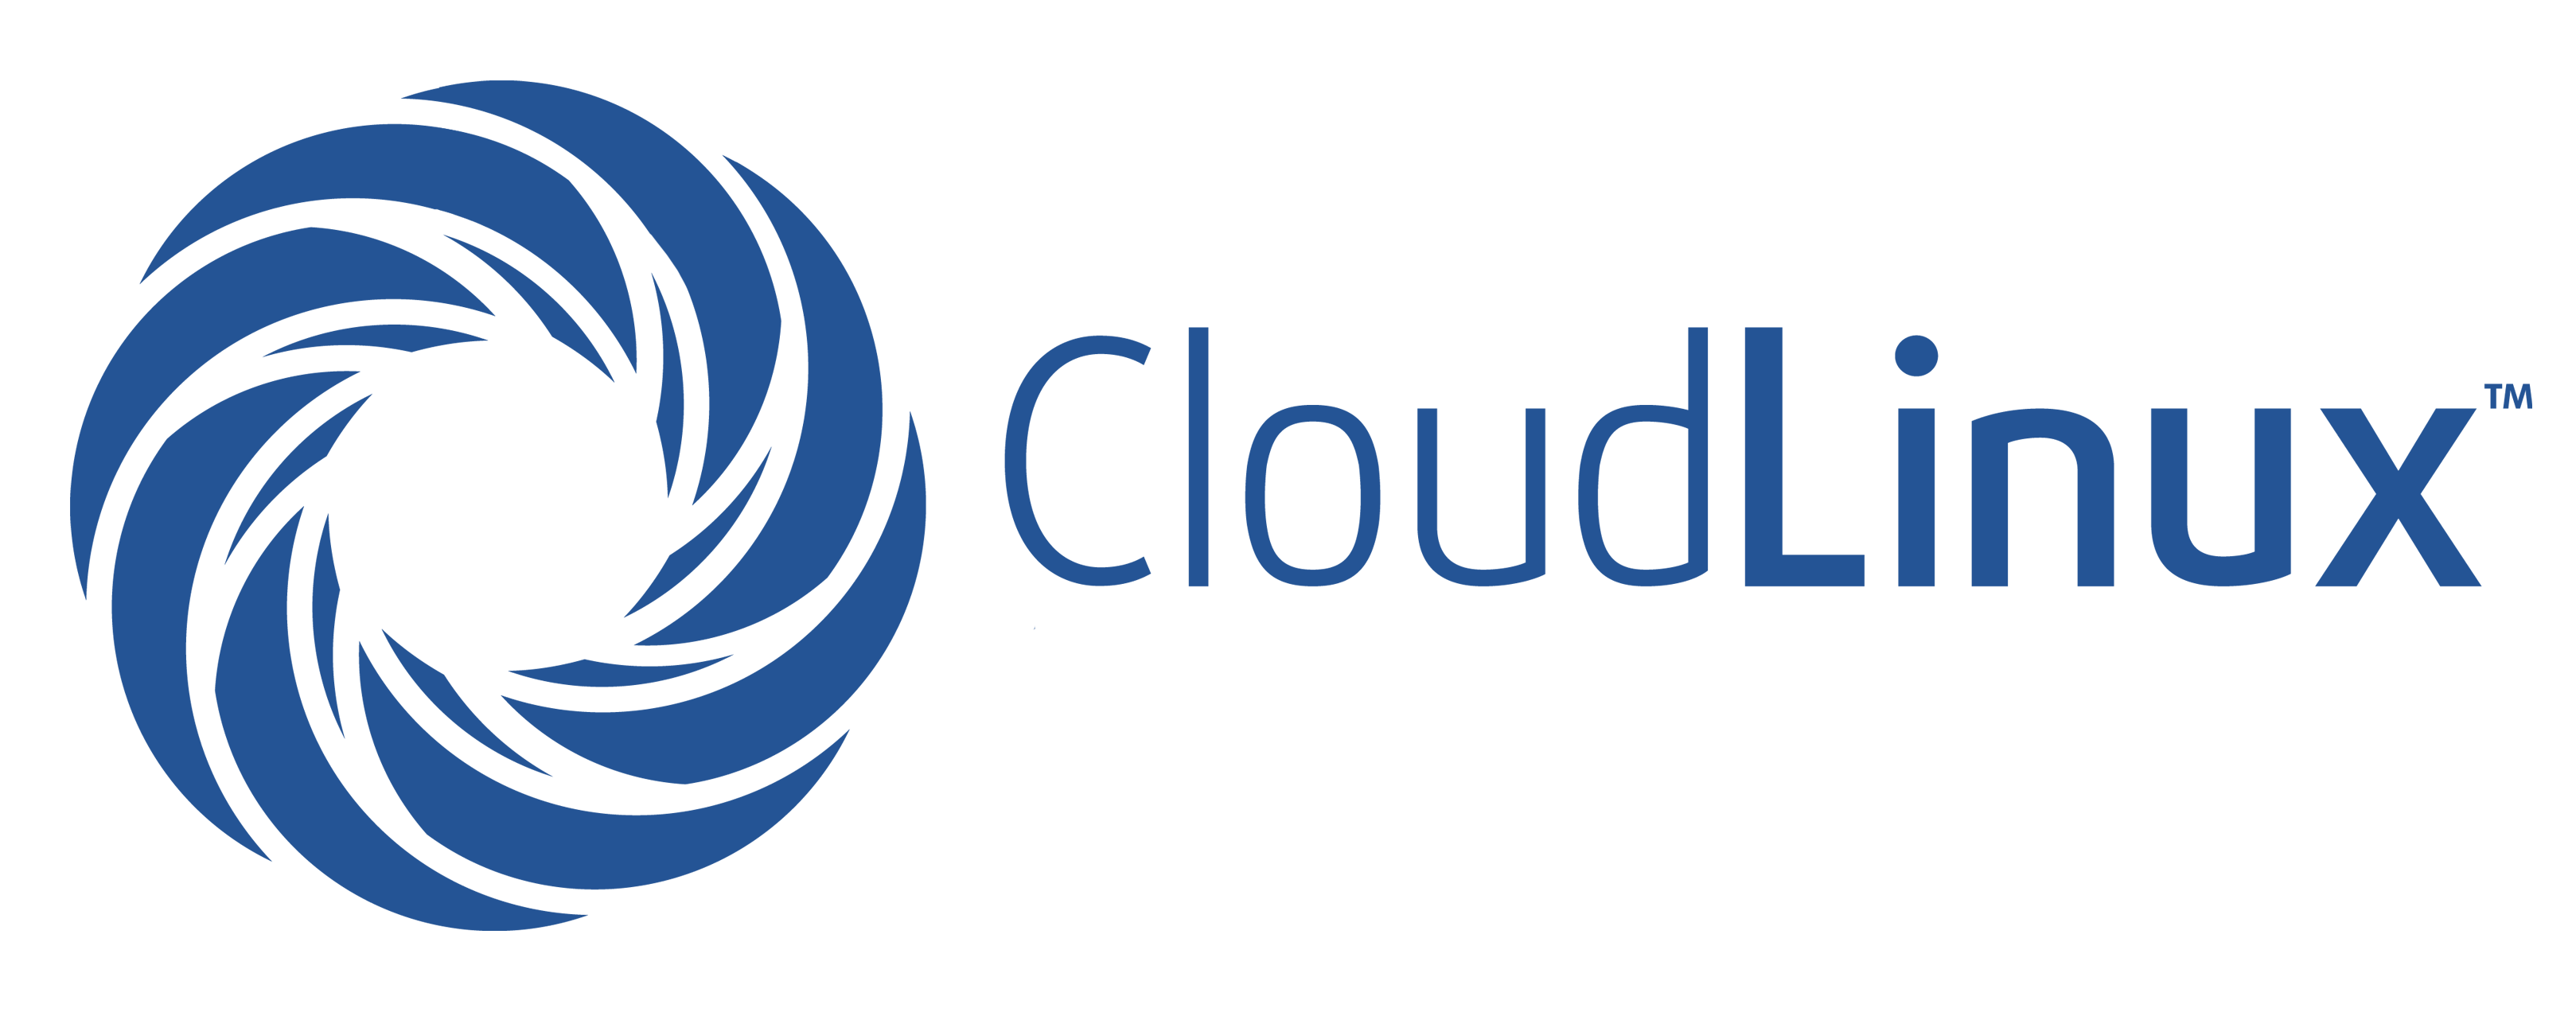 Cloudlinux license